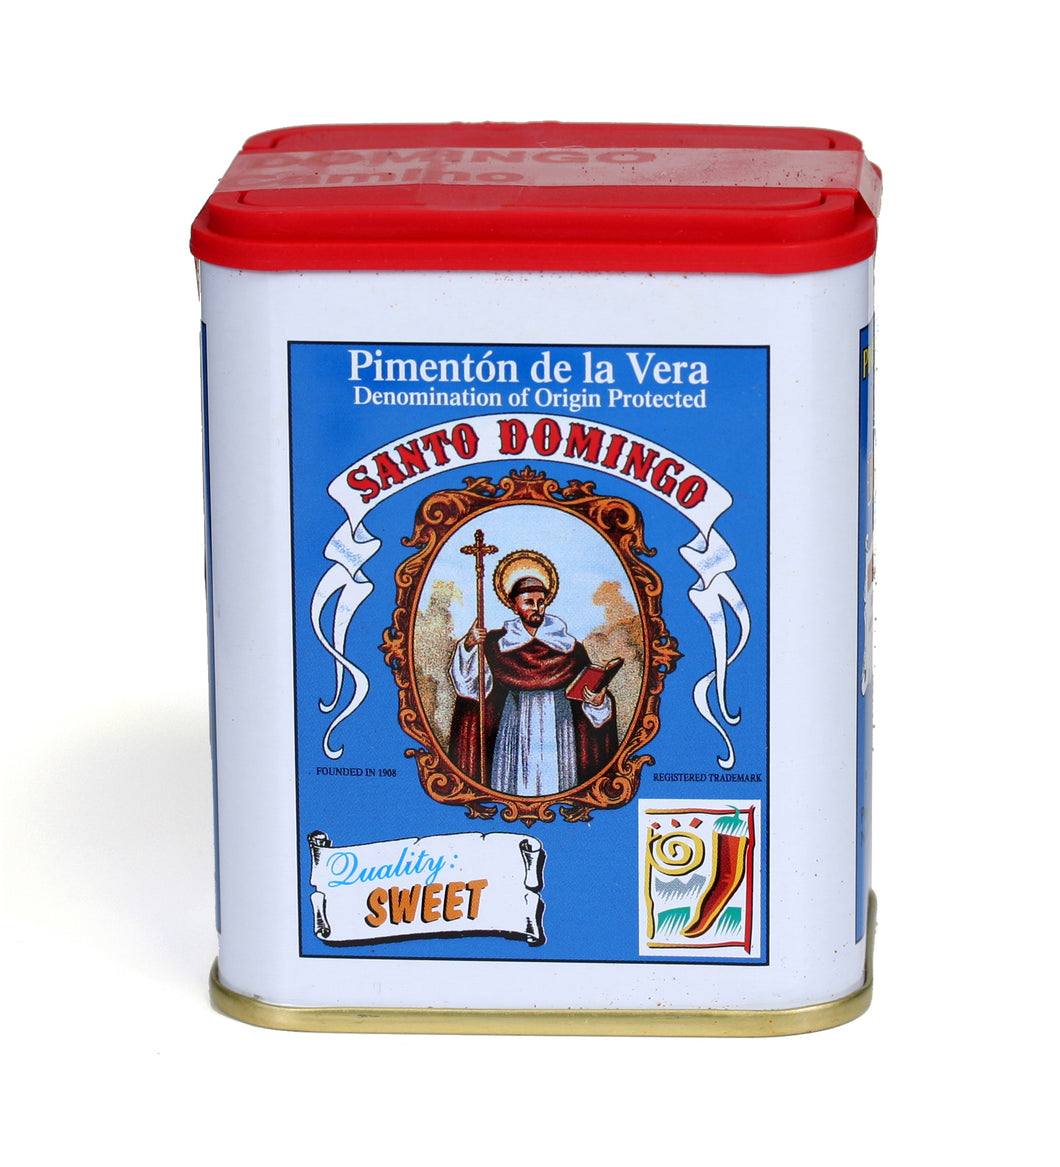 Beautiful tin can of Pimenton de la Vera, Sweet from Santo Domingo.